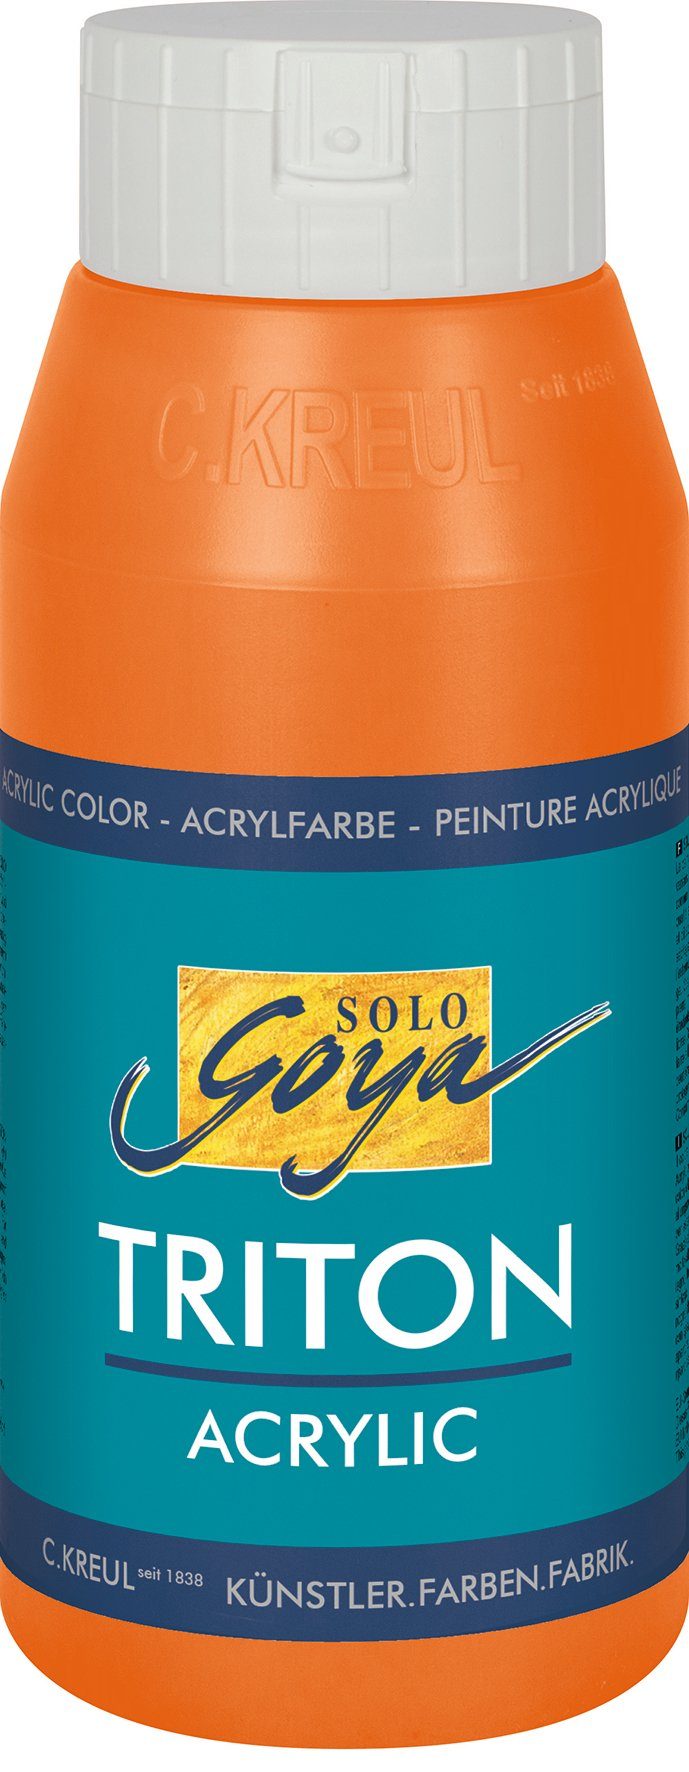 Kreul Acrylfarbe Solo Triton Goya 750 Aprikose ml Acrylic